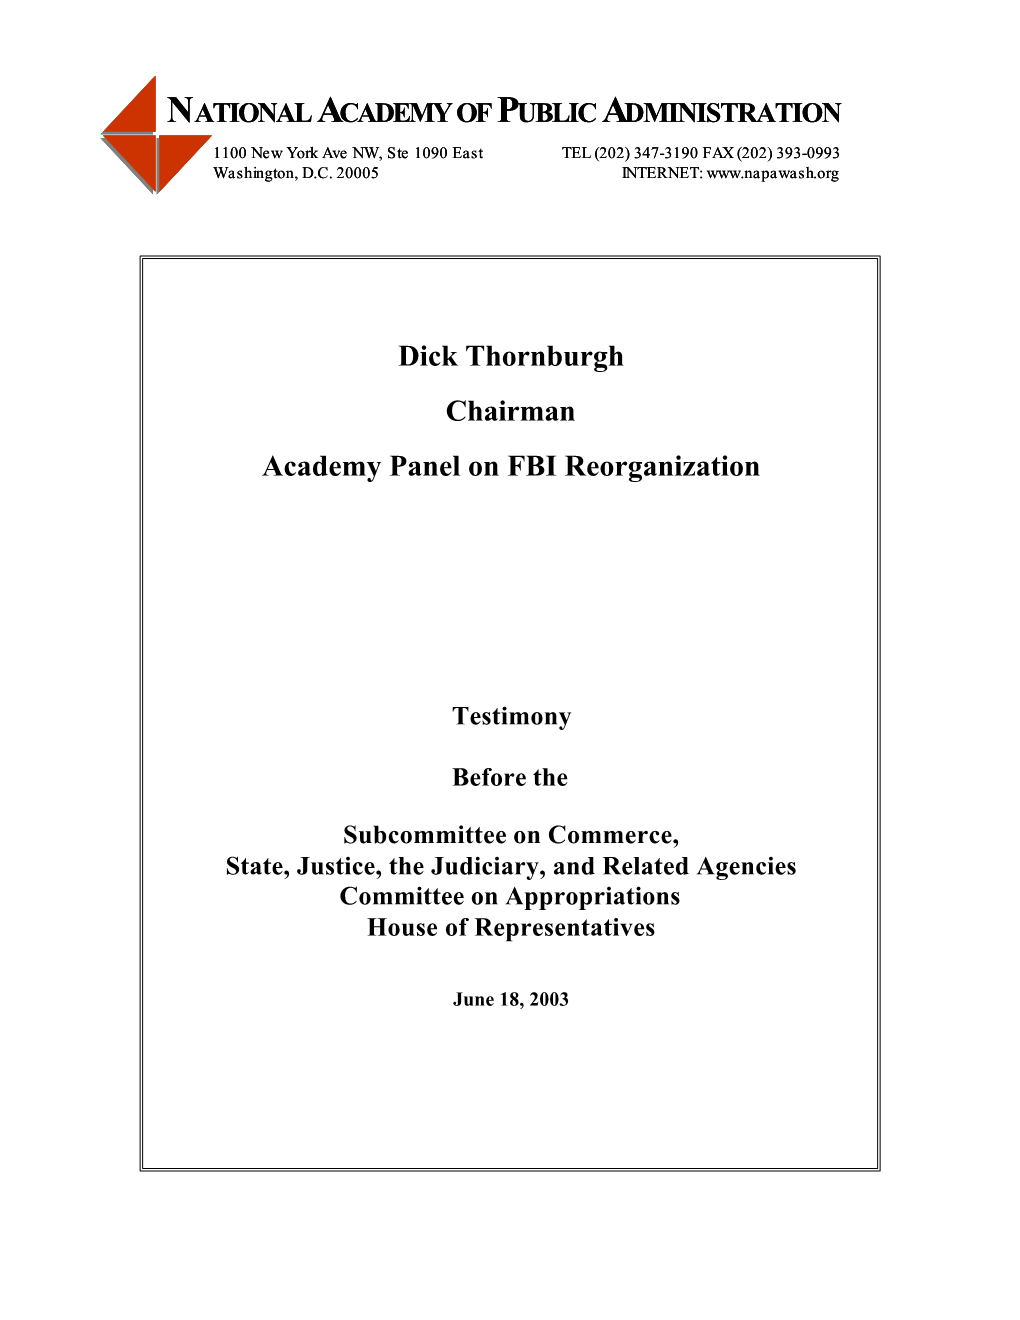 National Academy of Public Administration Panel on FBI Reorganization